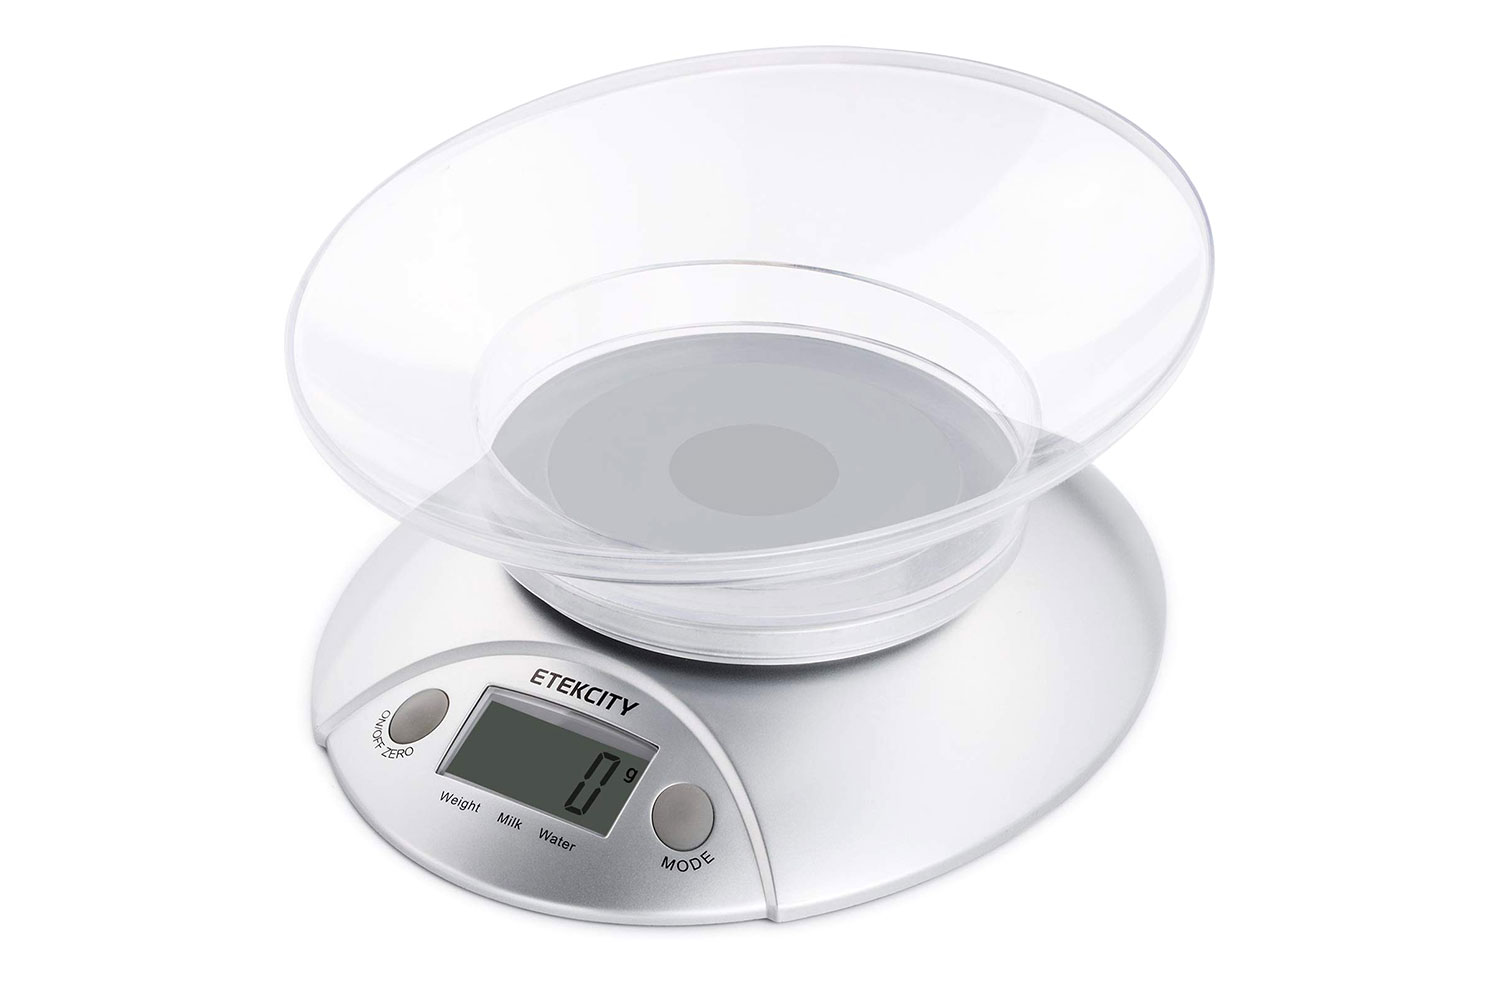 Tomo Digital Food Scale. Ideal Meal Prep Helper. 11 lb maximum